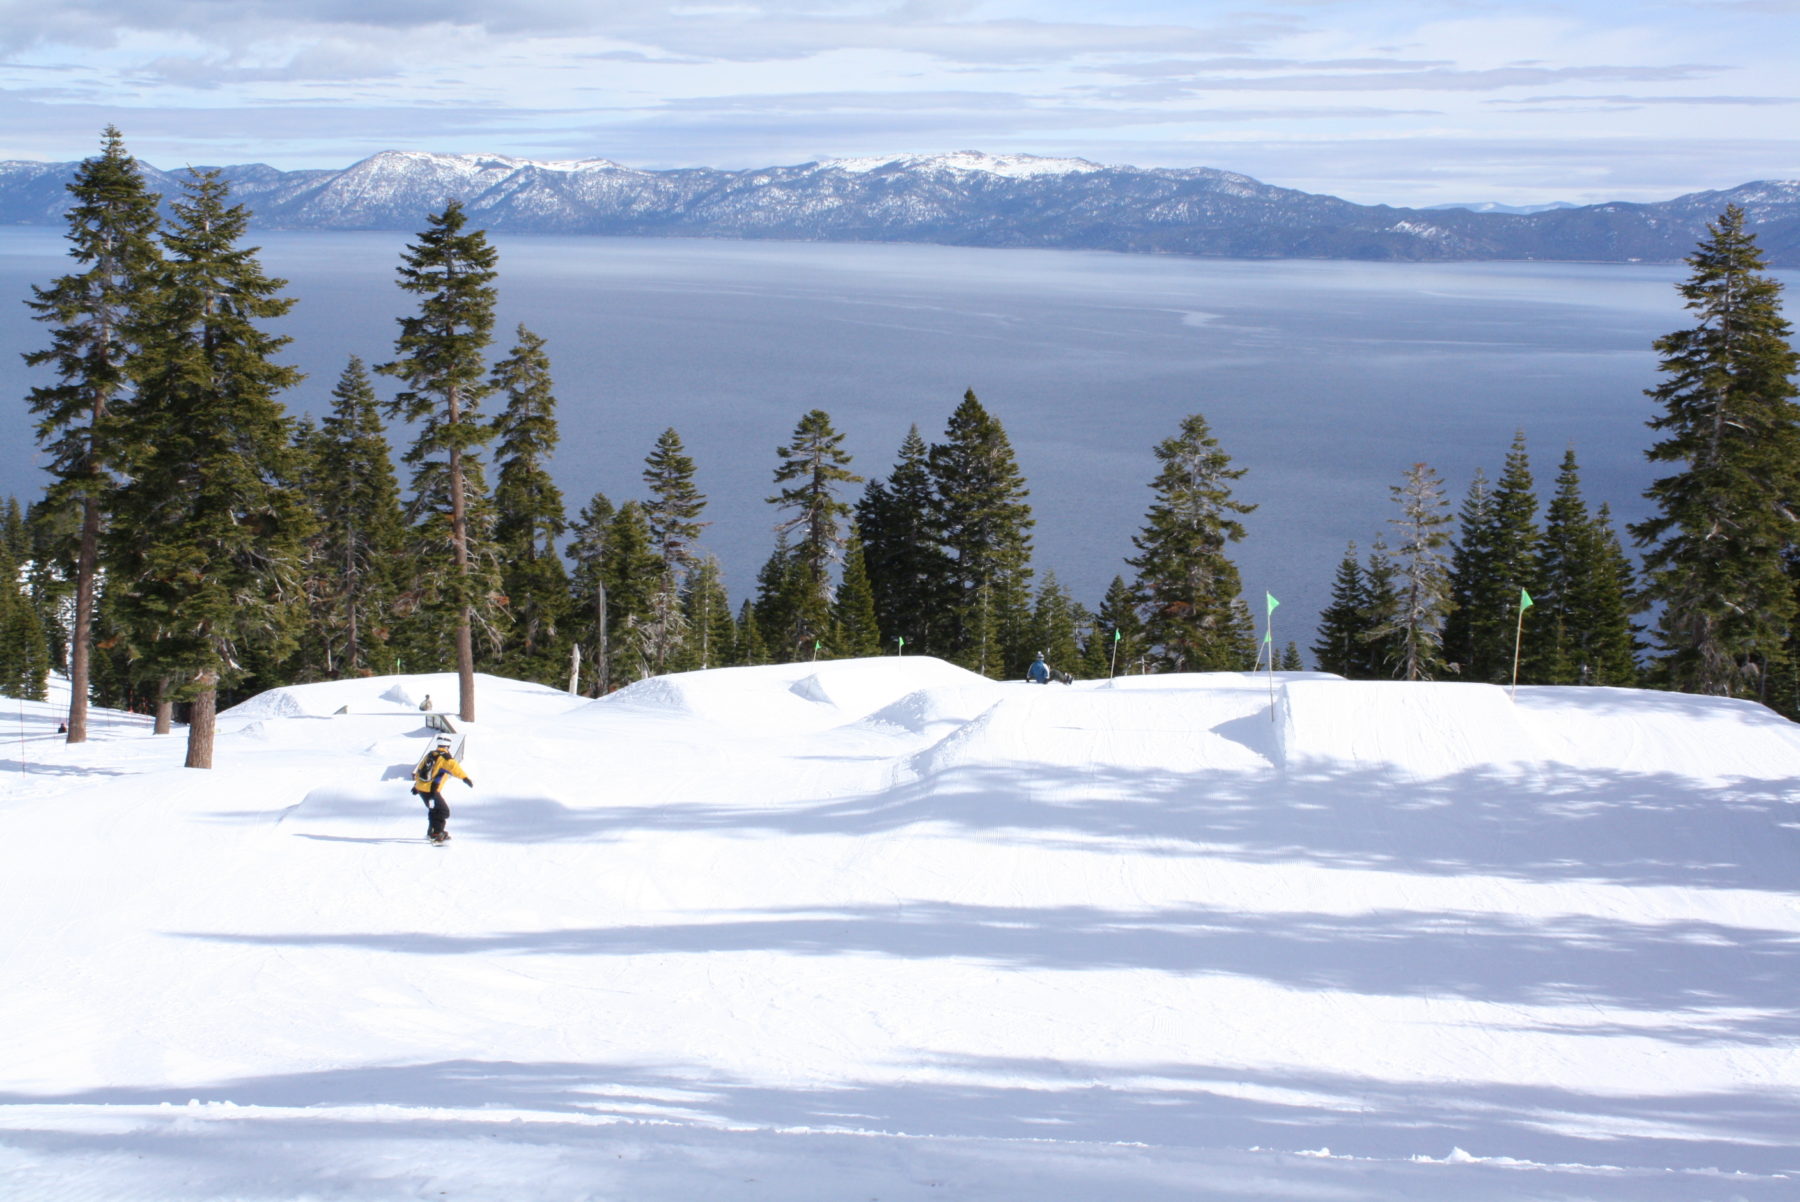 ski terrain park with lake in the backdrop